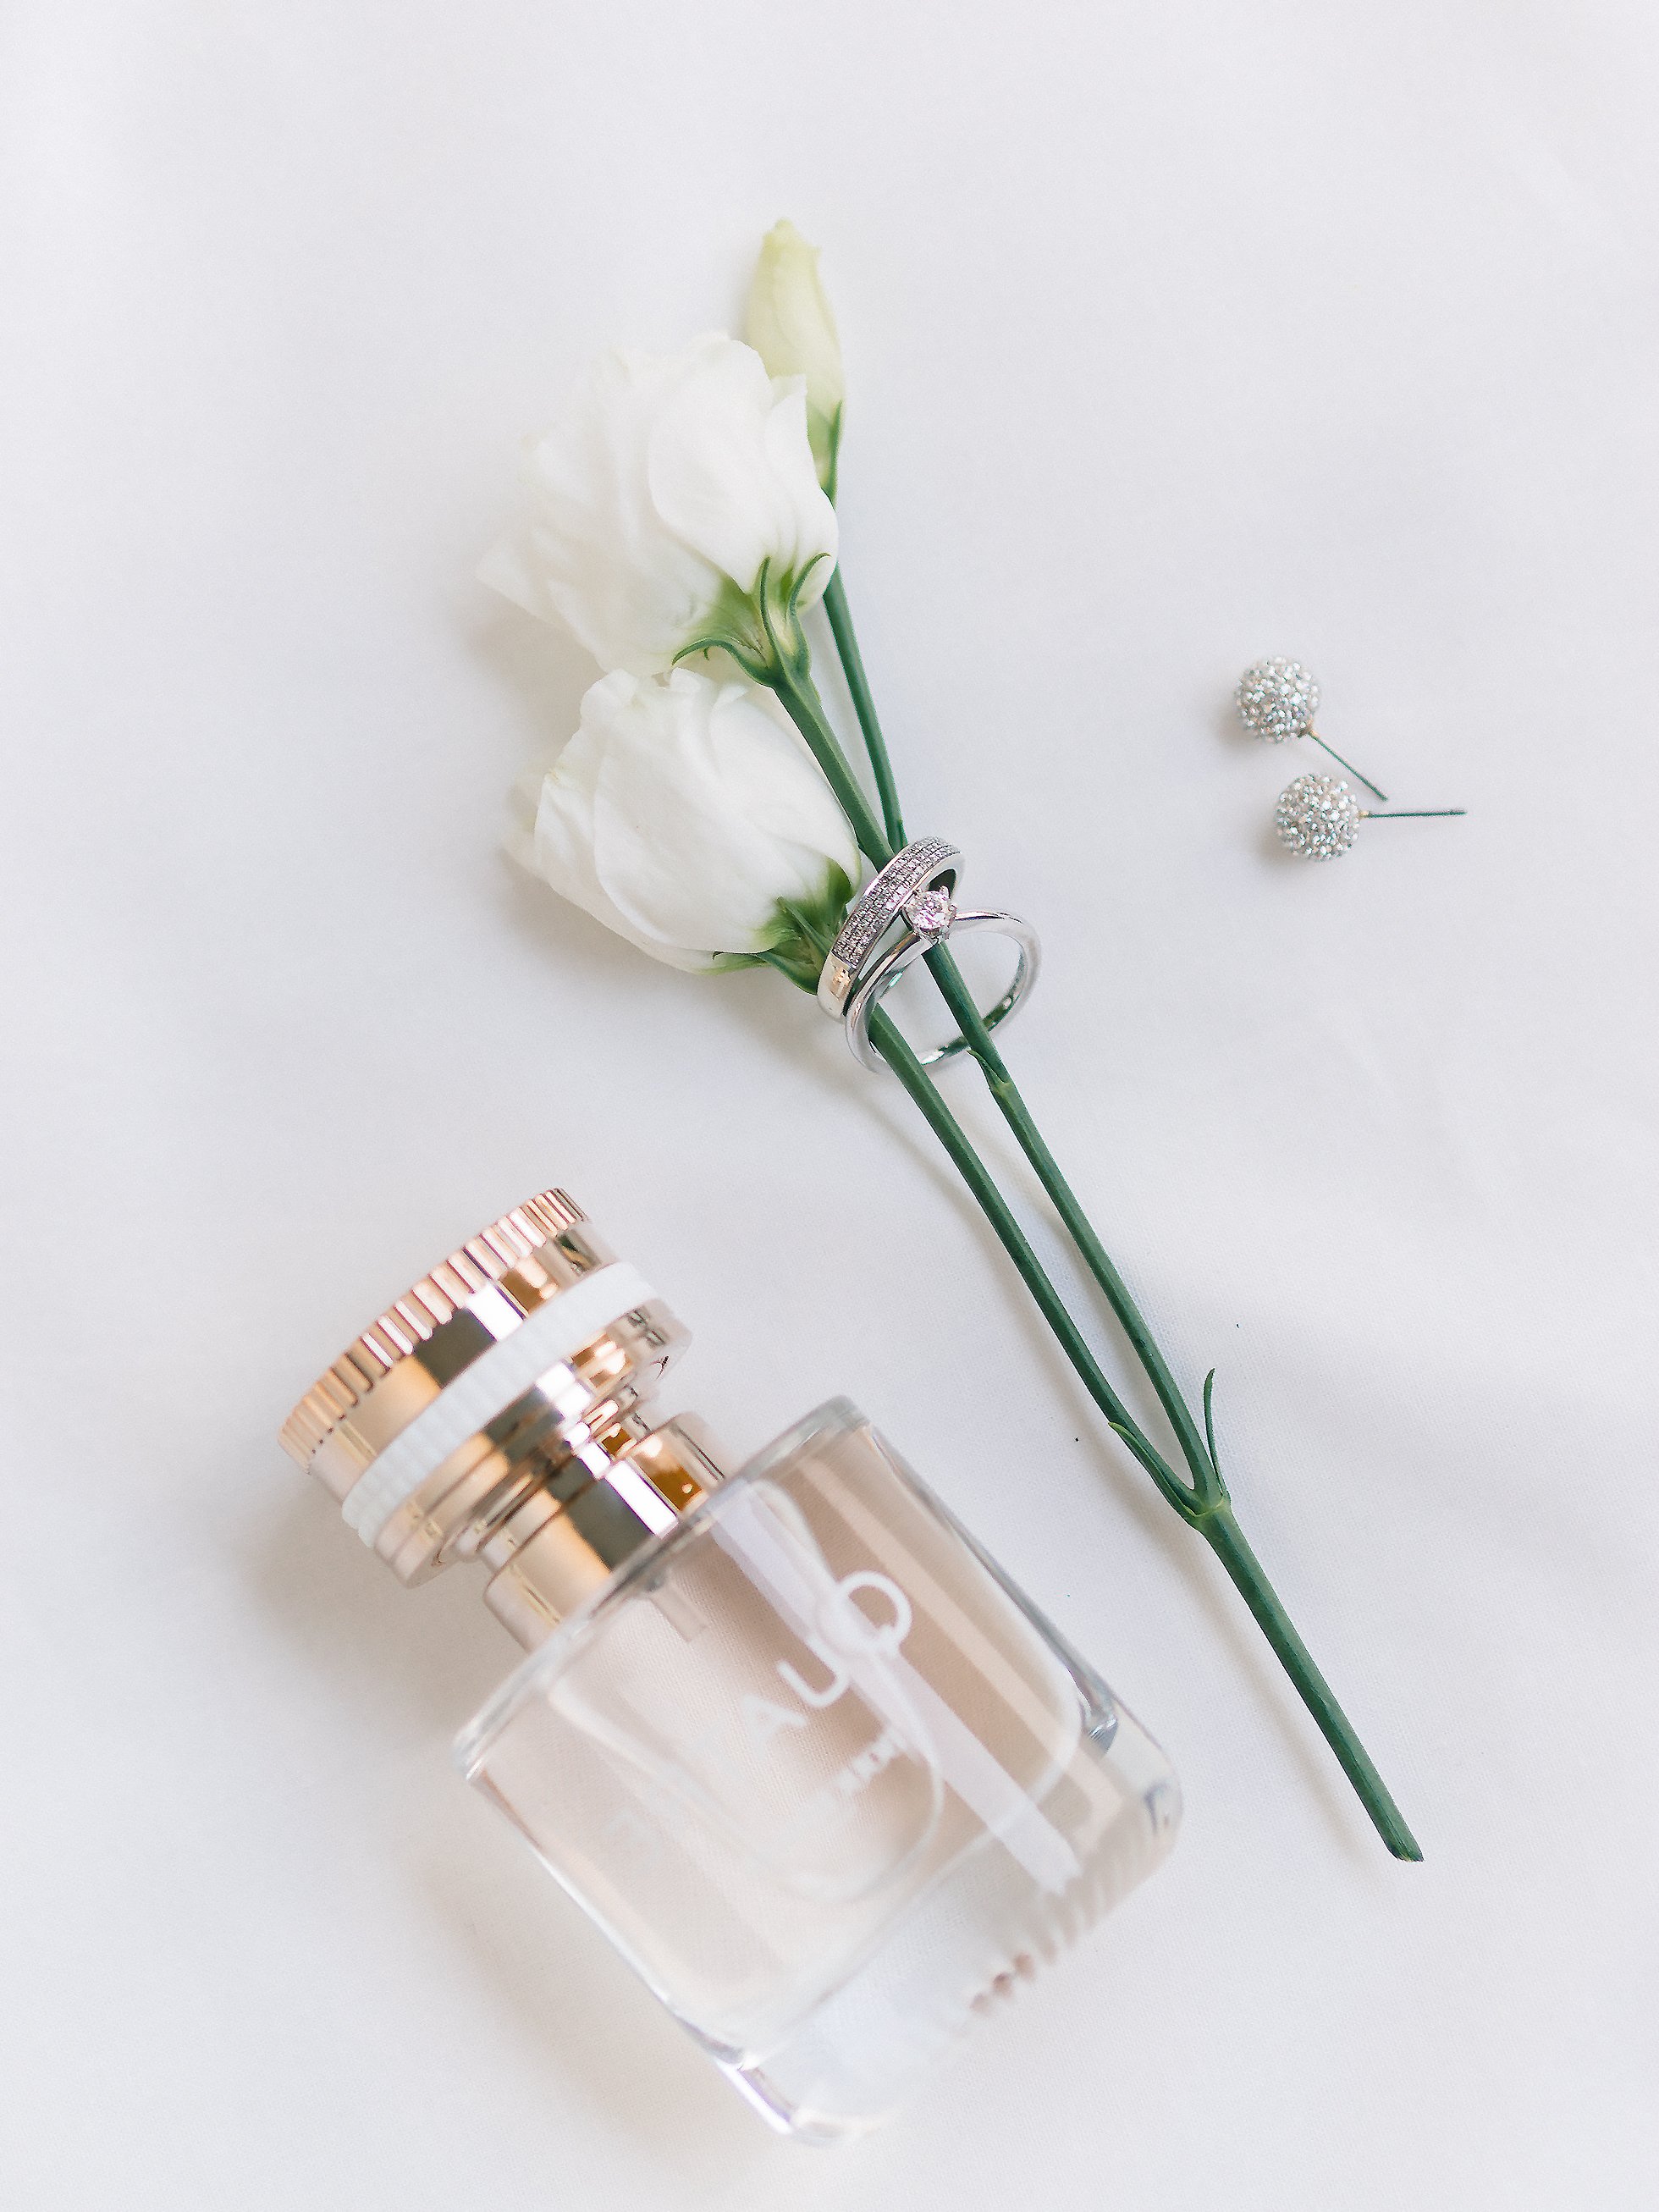 Häätuoksu - wedding fragrance